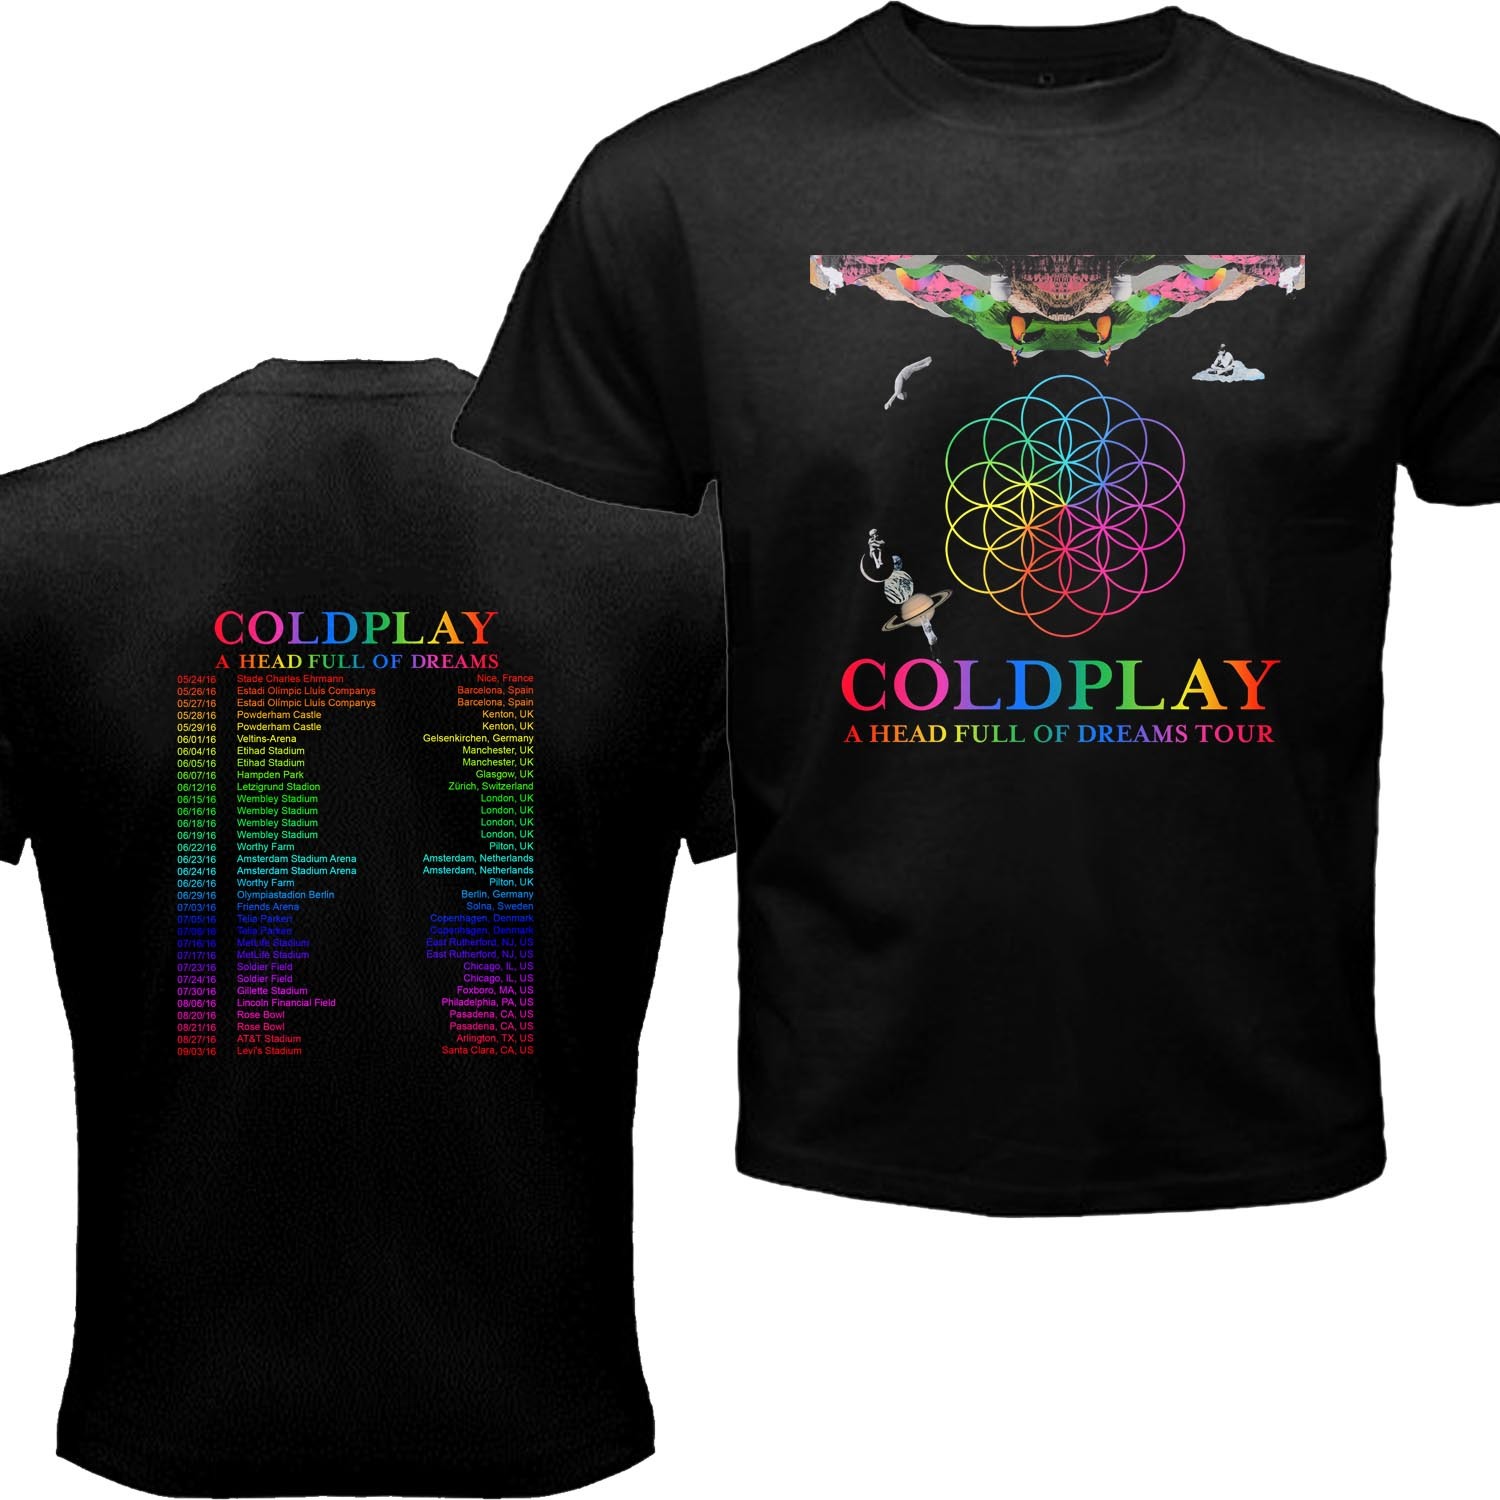 Hot Coldplay HEAD FULL OF DREAMS Tour Dates 2016 Black Tee TShirt